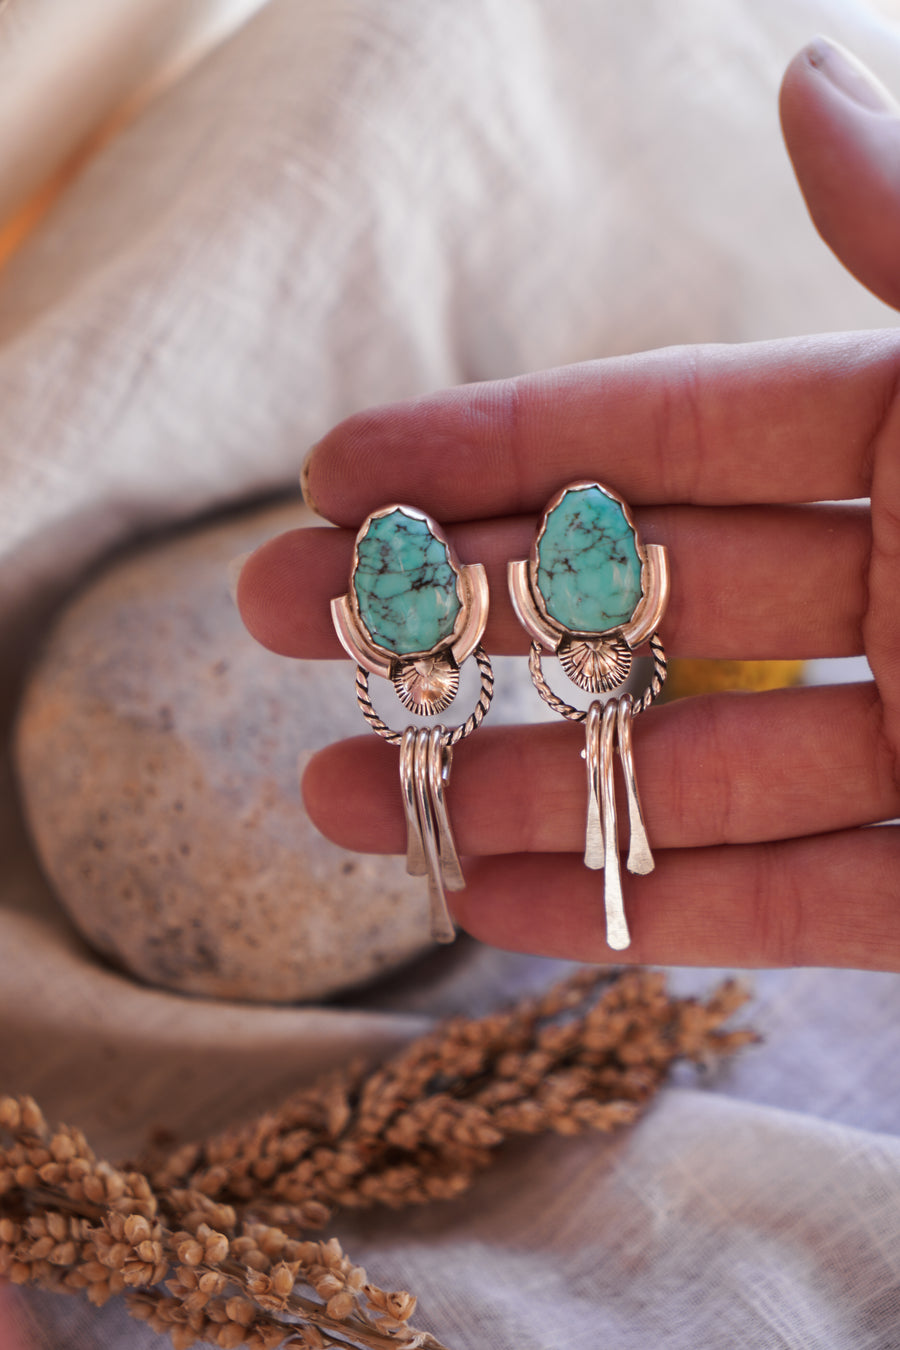 Egyptian Turquoise Statement Earrings